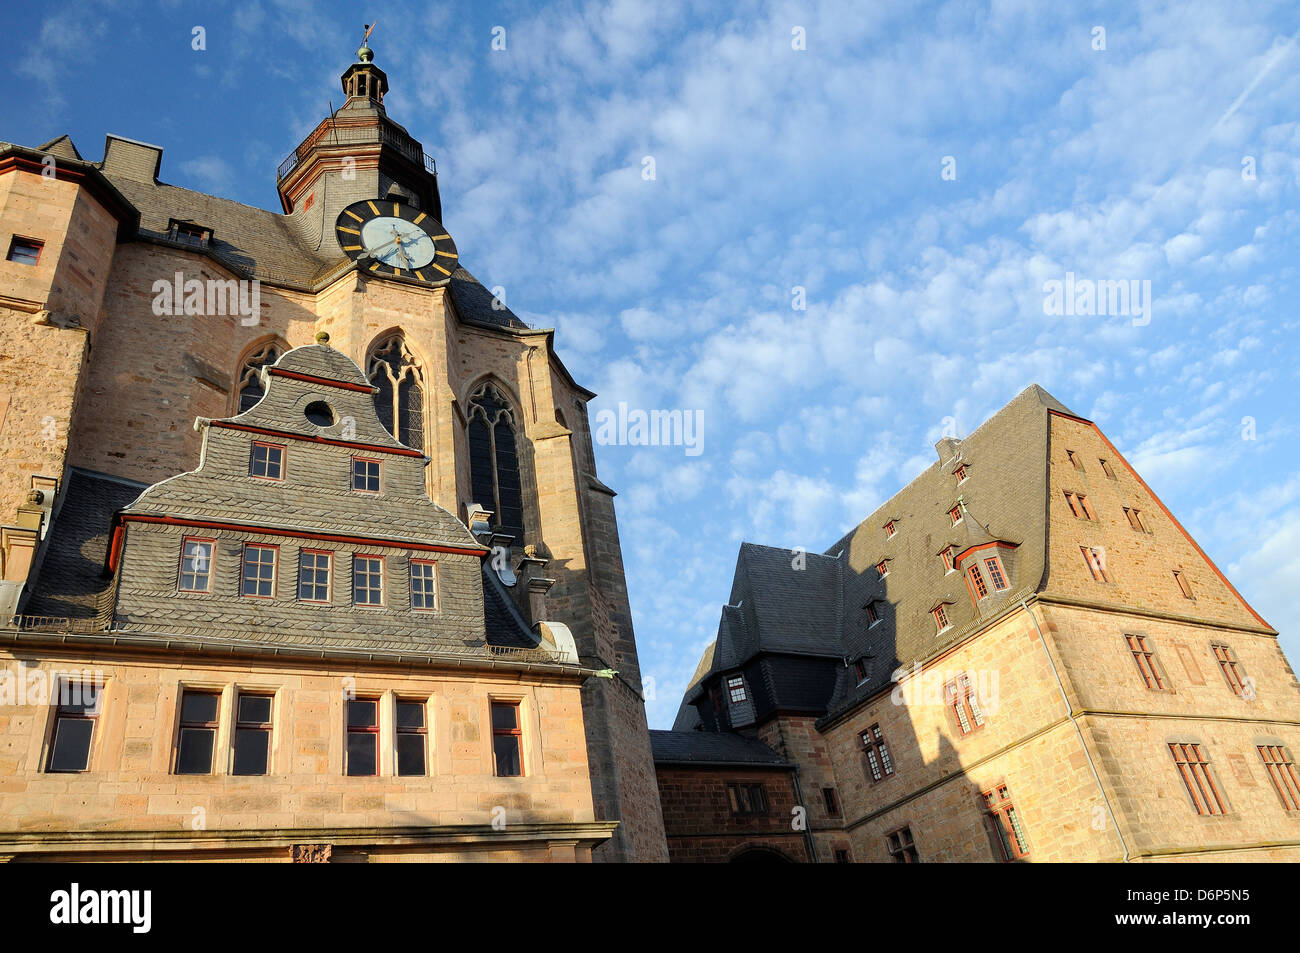 Landgrave castle clock tower, University Museum of Cultural History, Marburg, Hesse, Germany, Europe Stock Photo